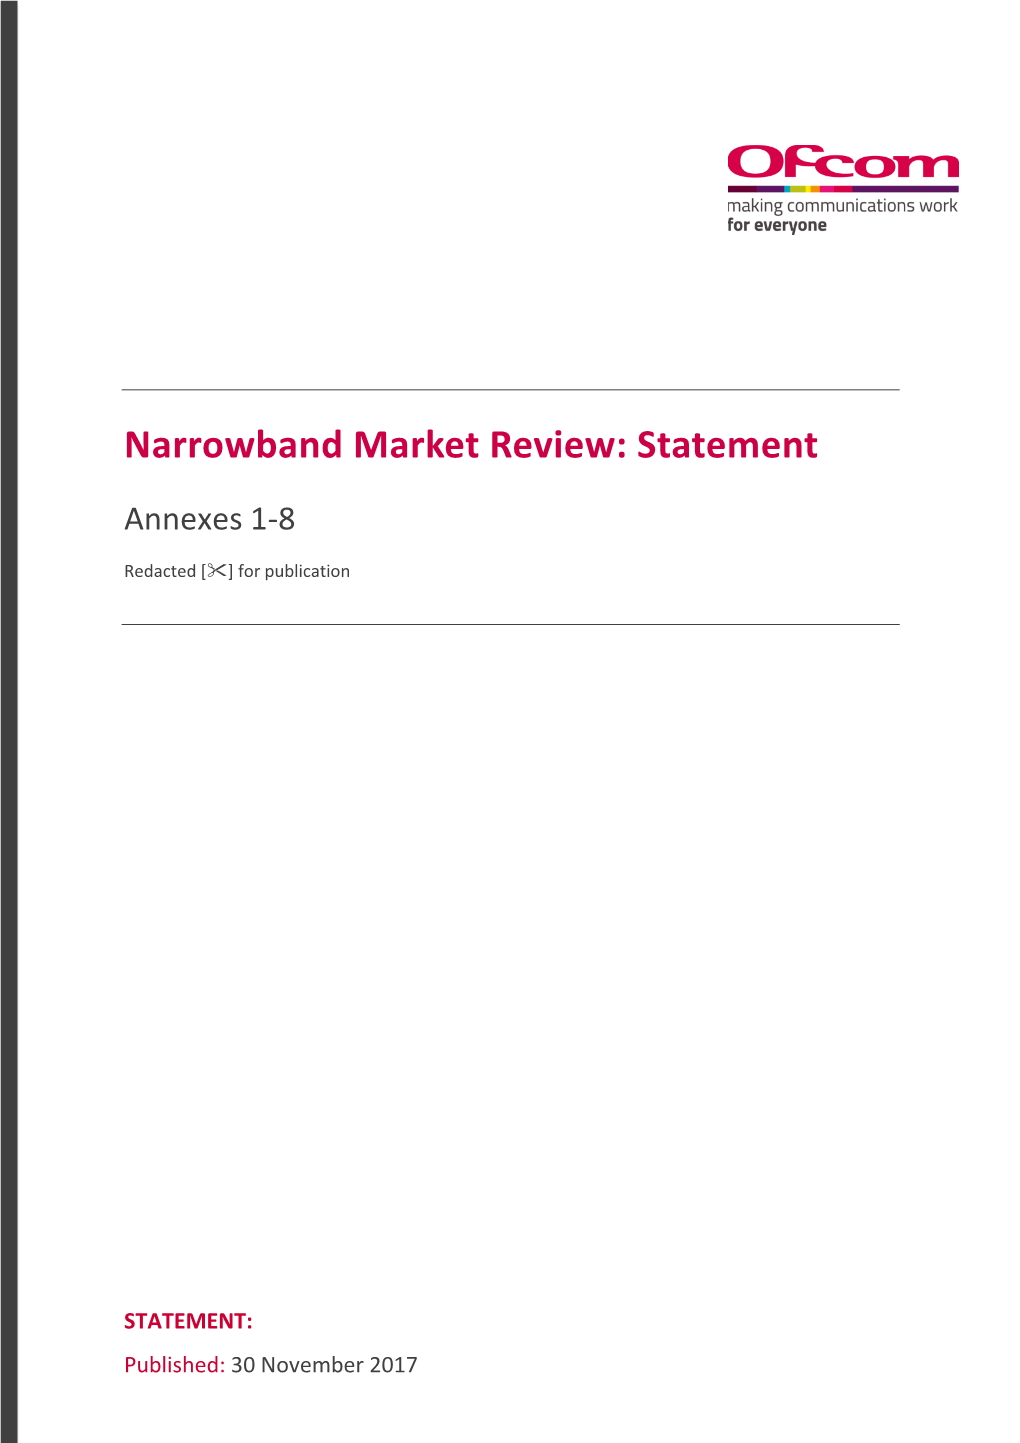 Narrowband Market Review: Statement